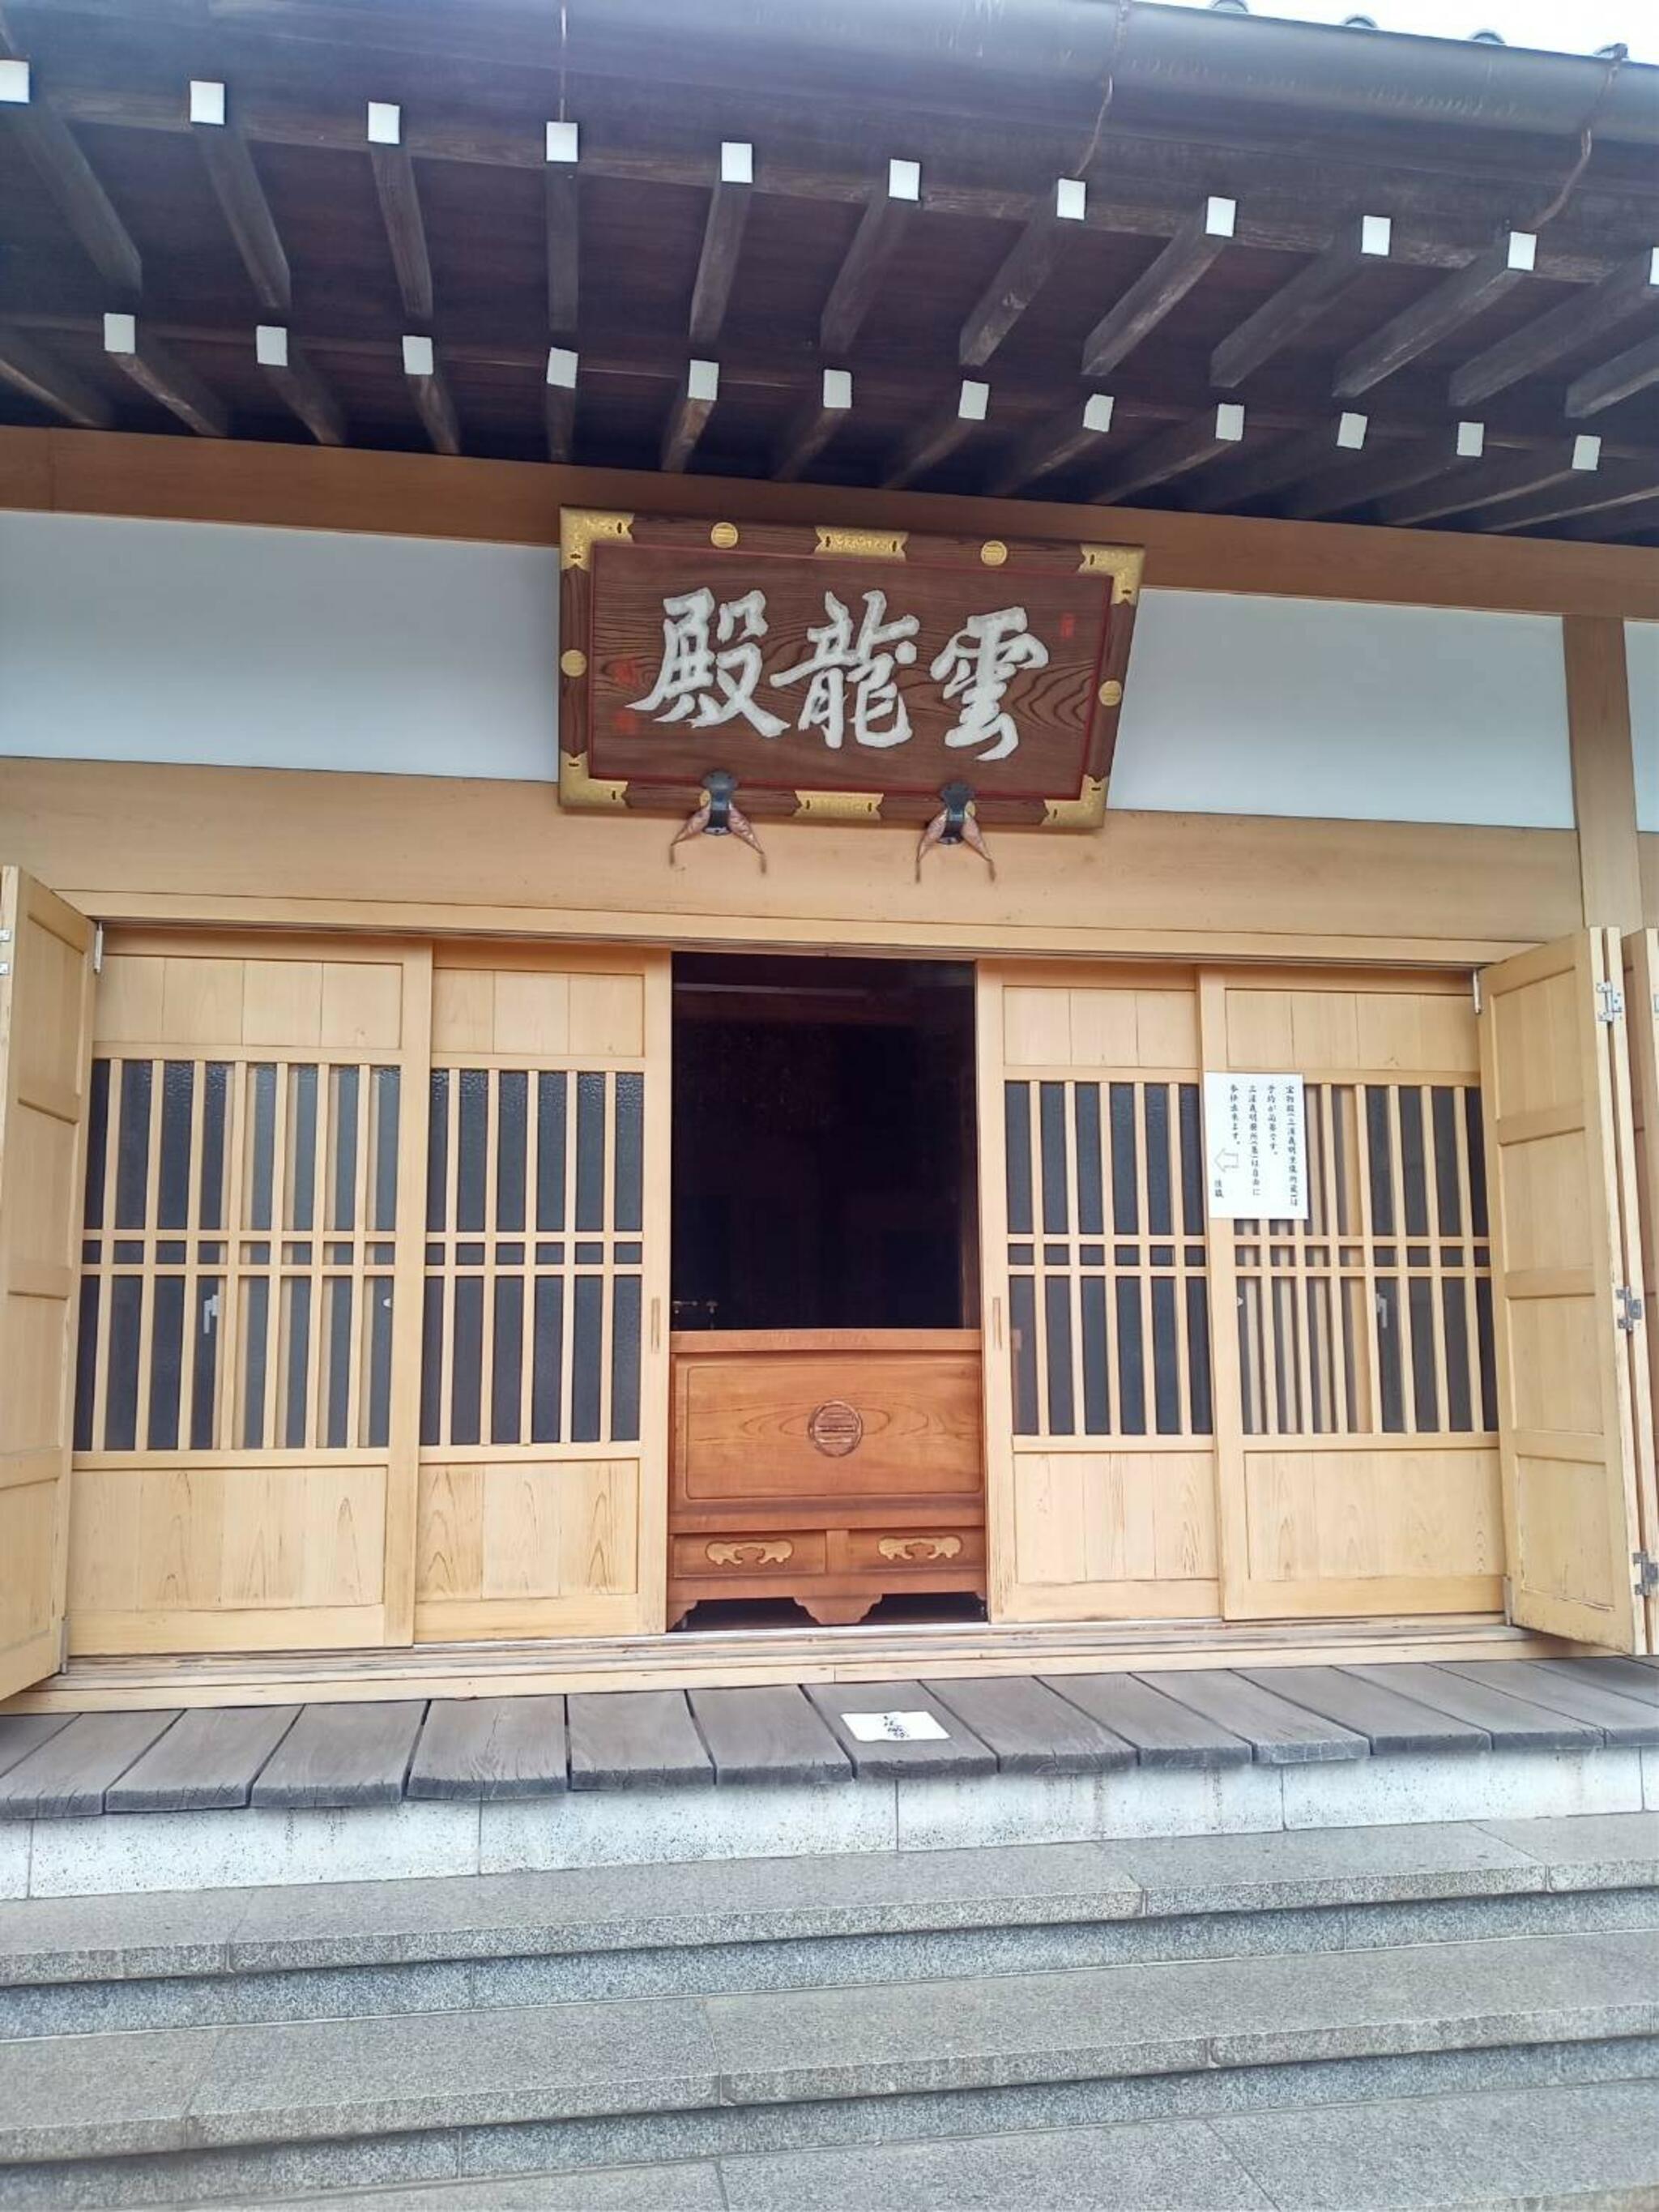 満昌寺 - 横須賀市大矢部/寺院 | Yahoo!マップ